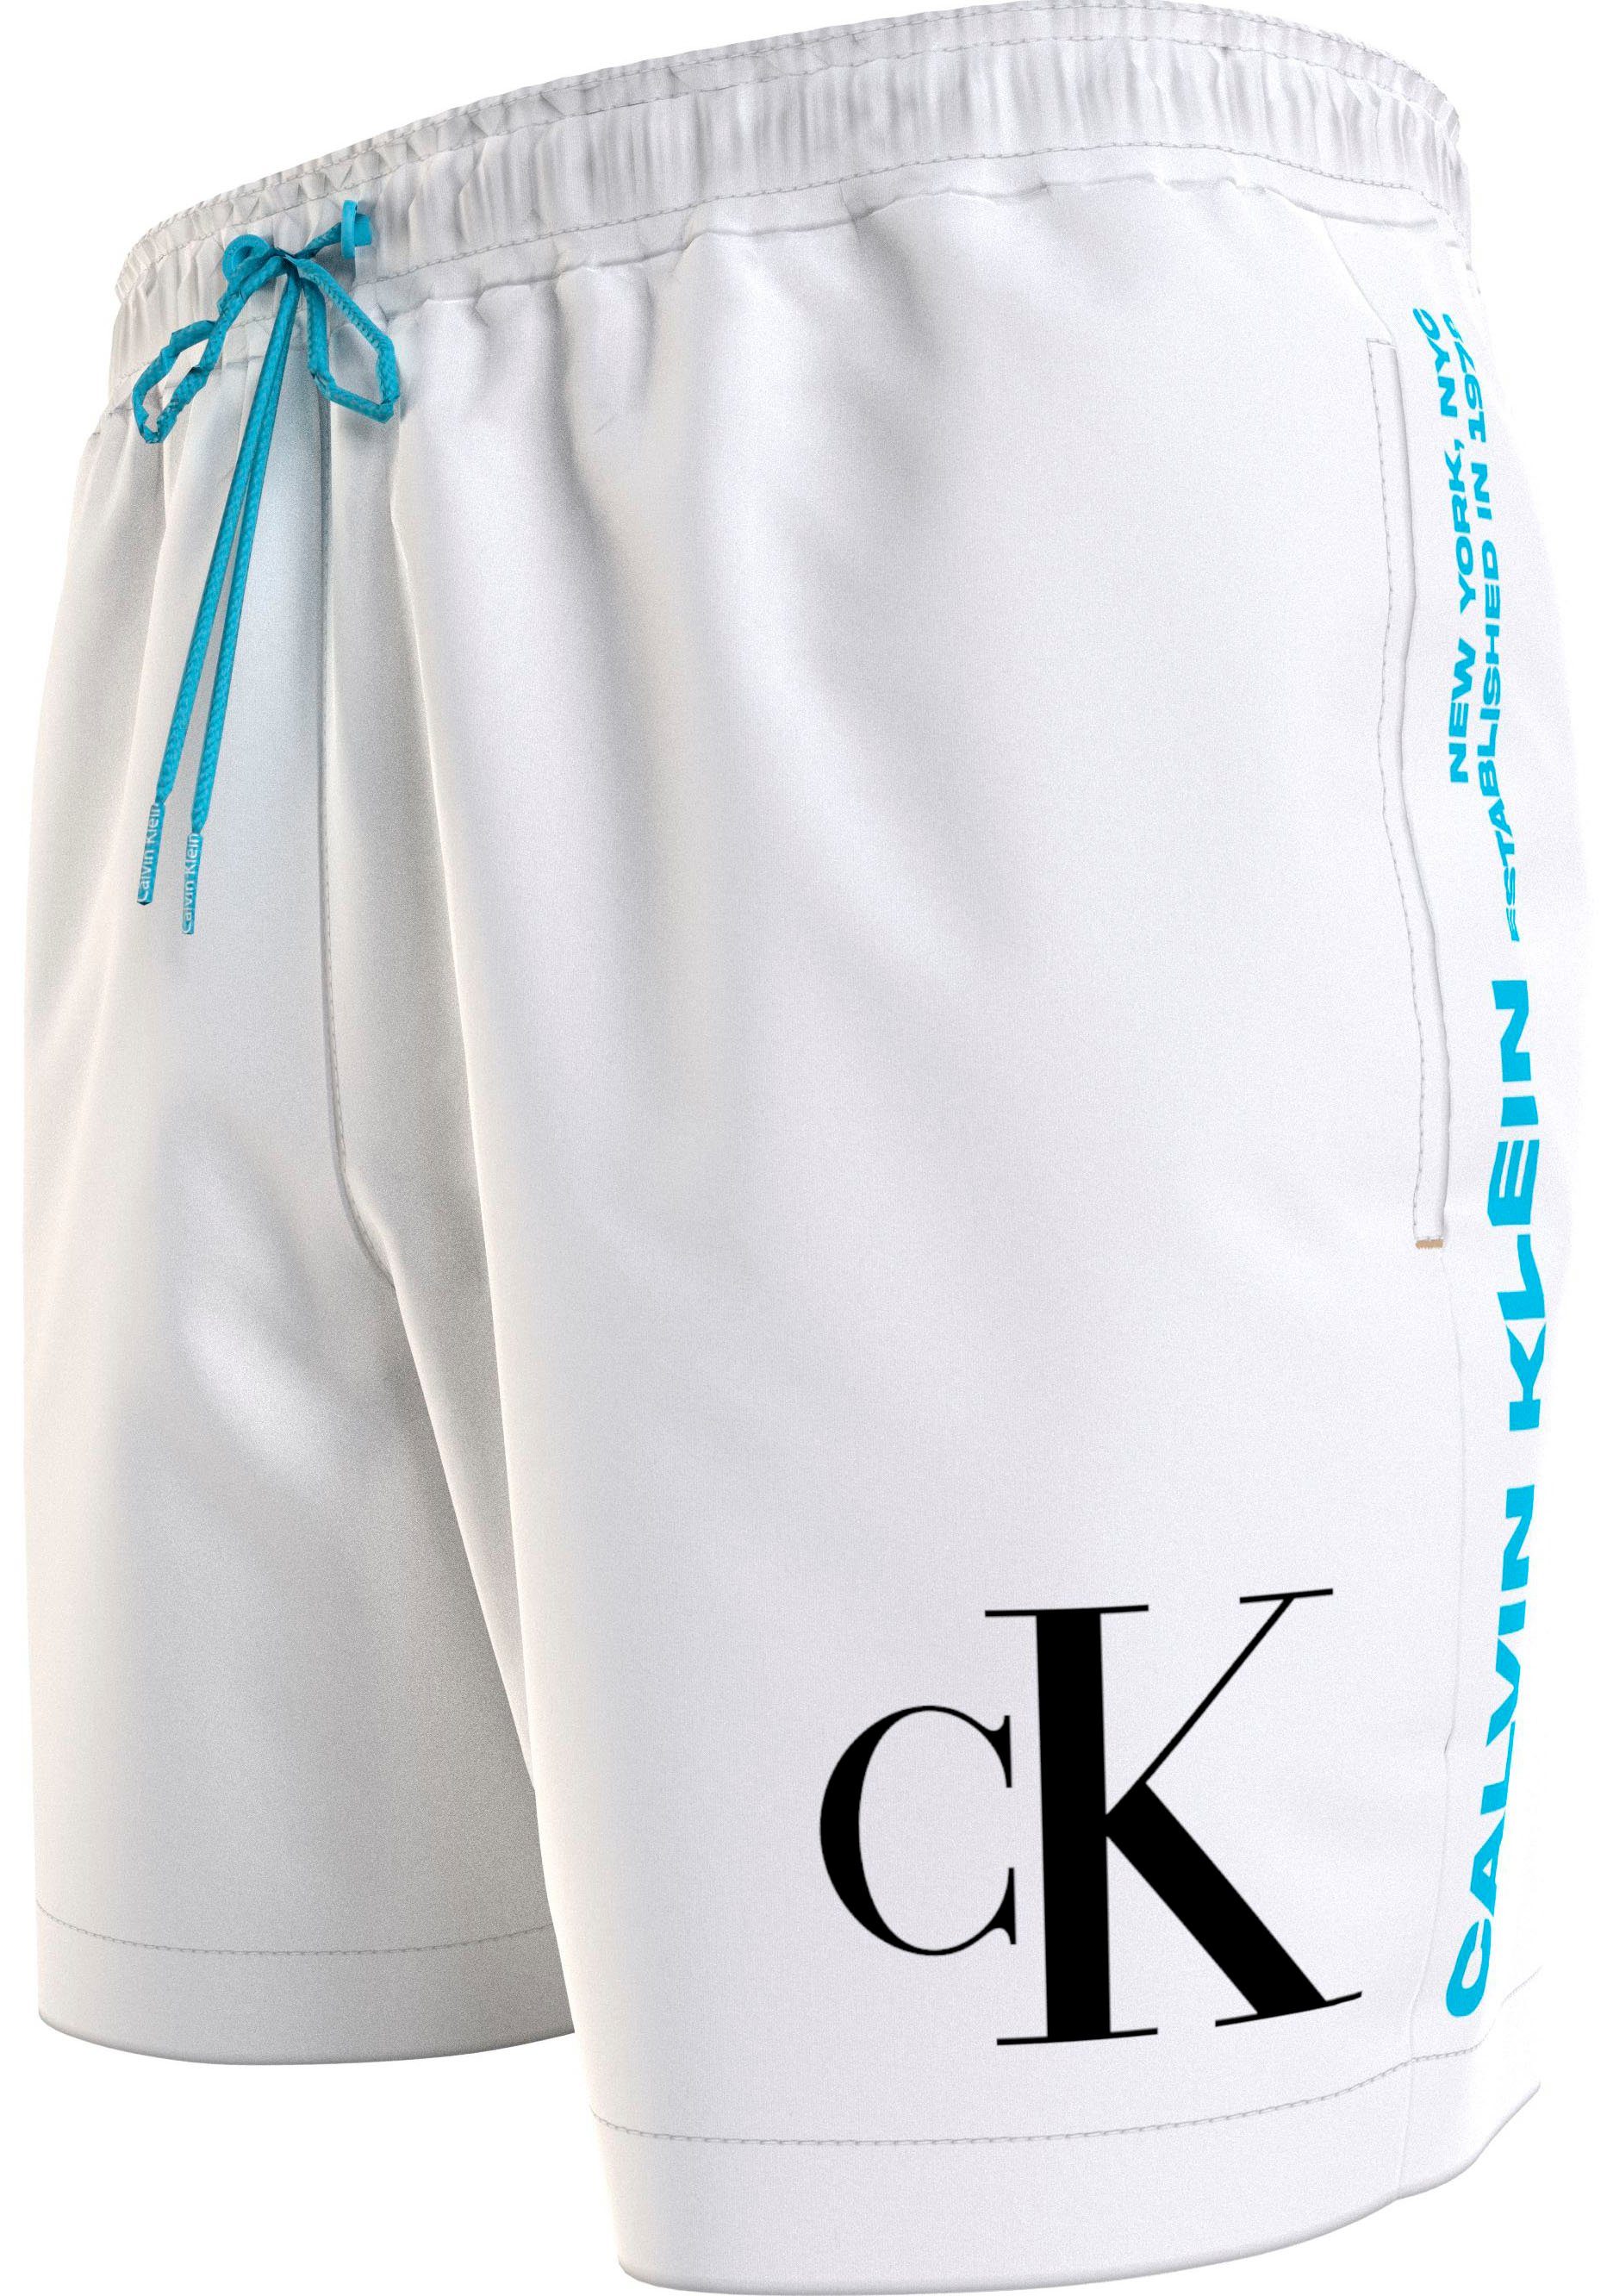 Calvin Klein Swimwear Badehose mit Kordel